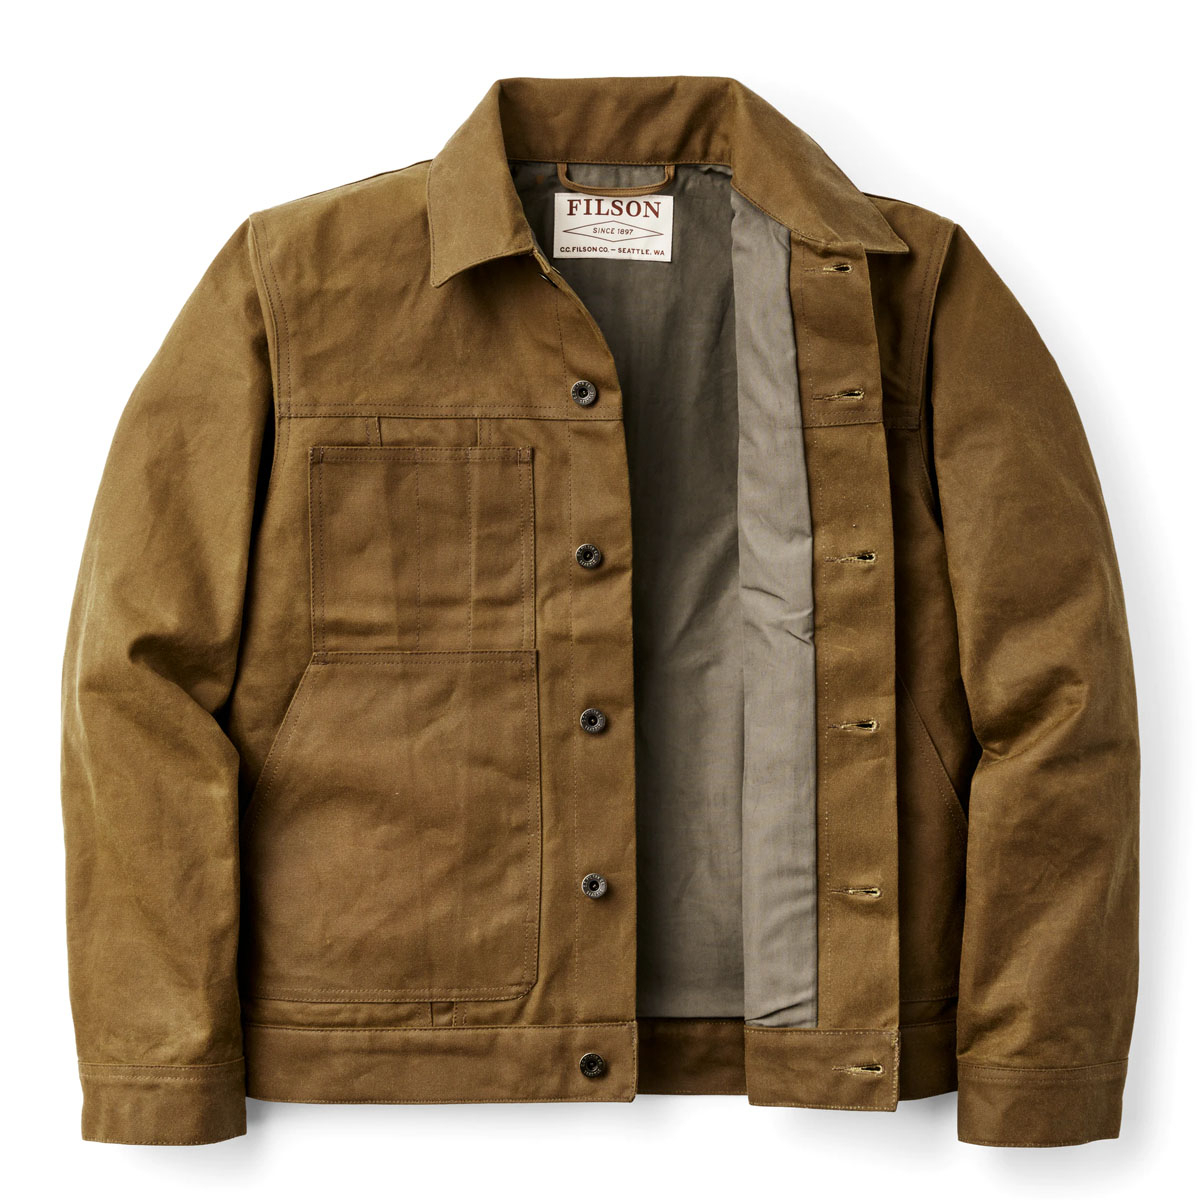 Filson Tin Cloth Short Lined Cruiser Jacket Dark Tan, tough work jacket